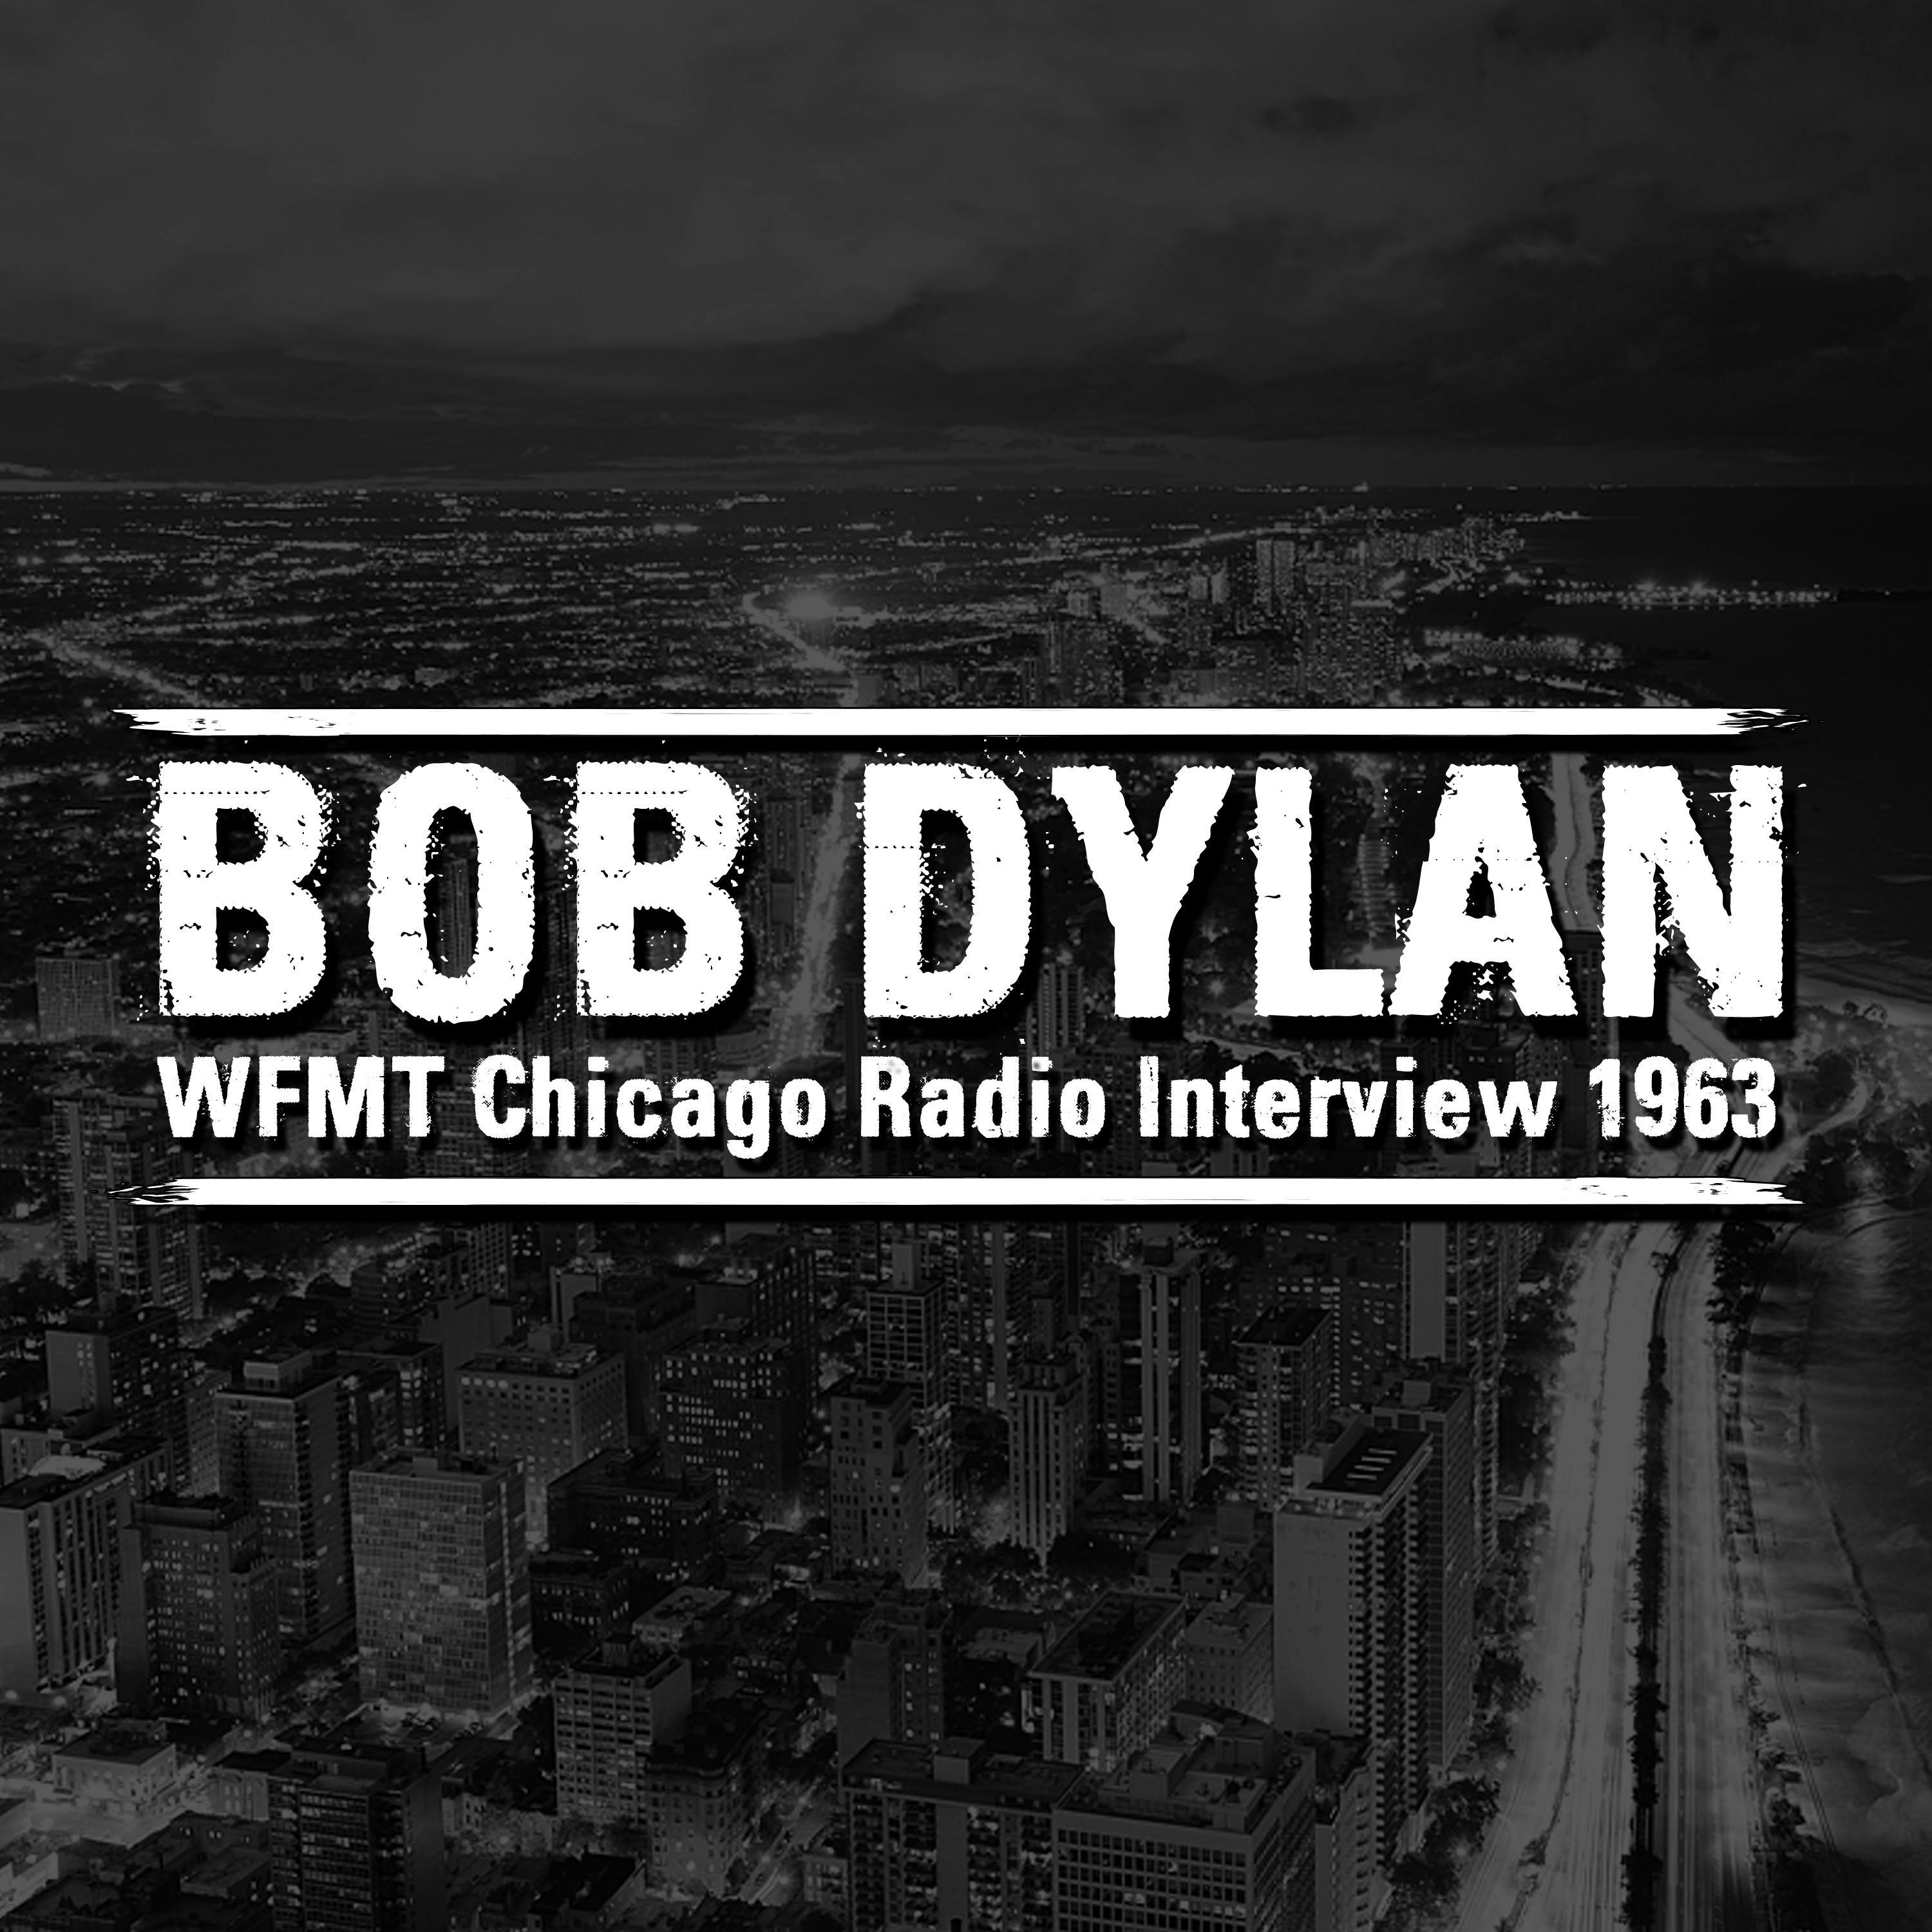 WFMT Chicago Radio Interview 1963 - Bob Dylan